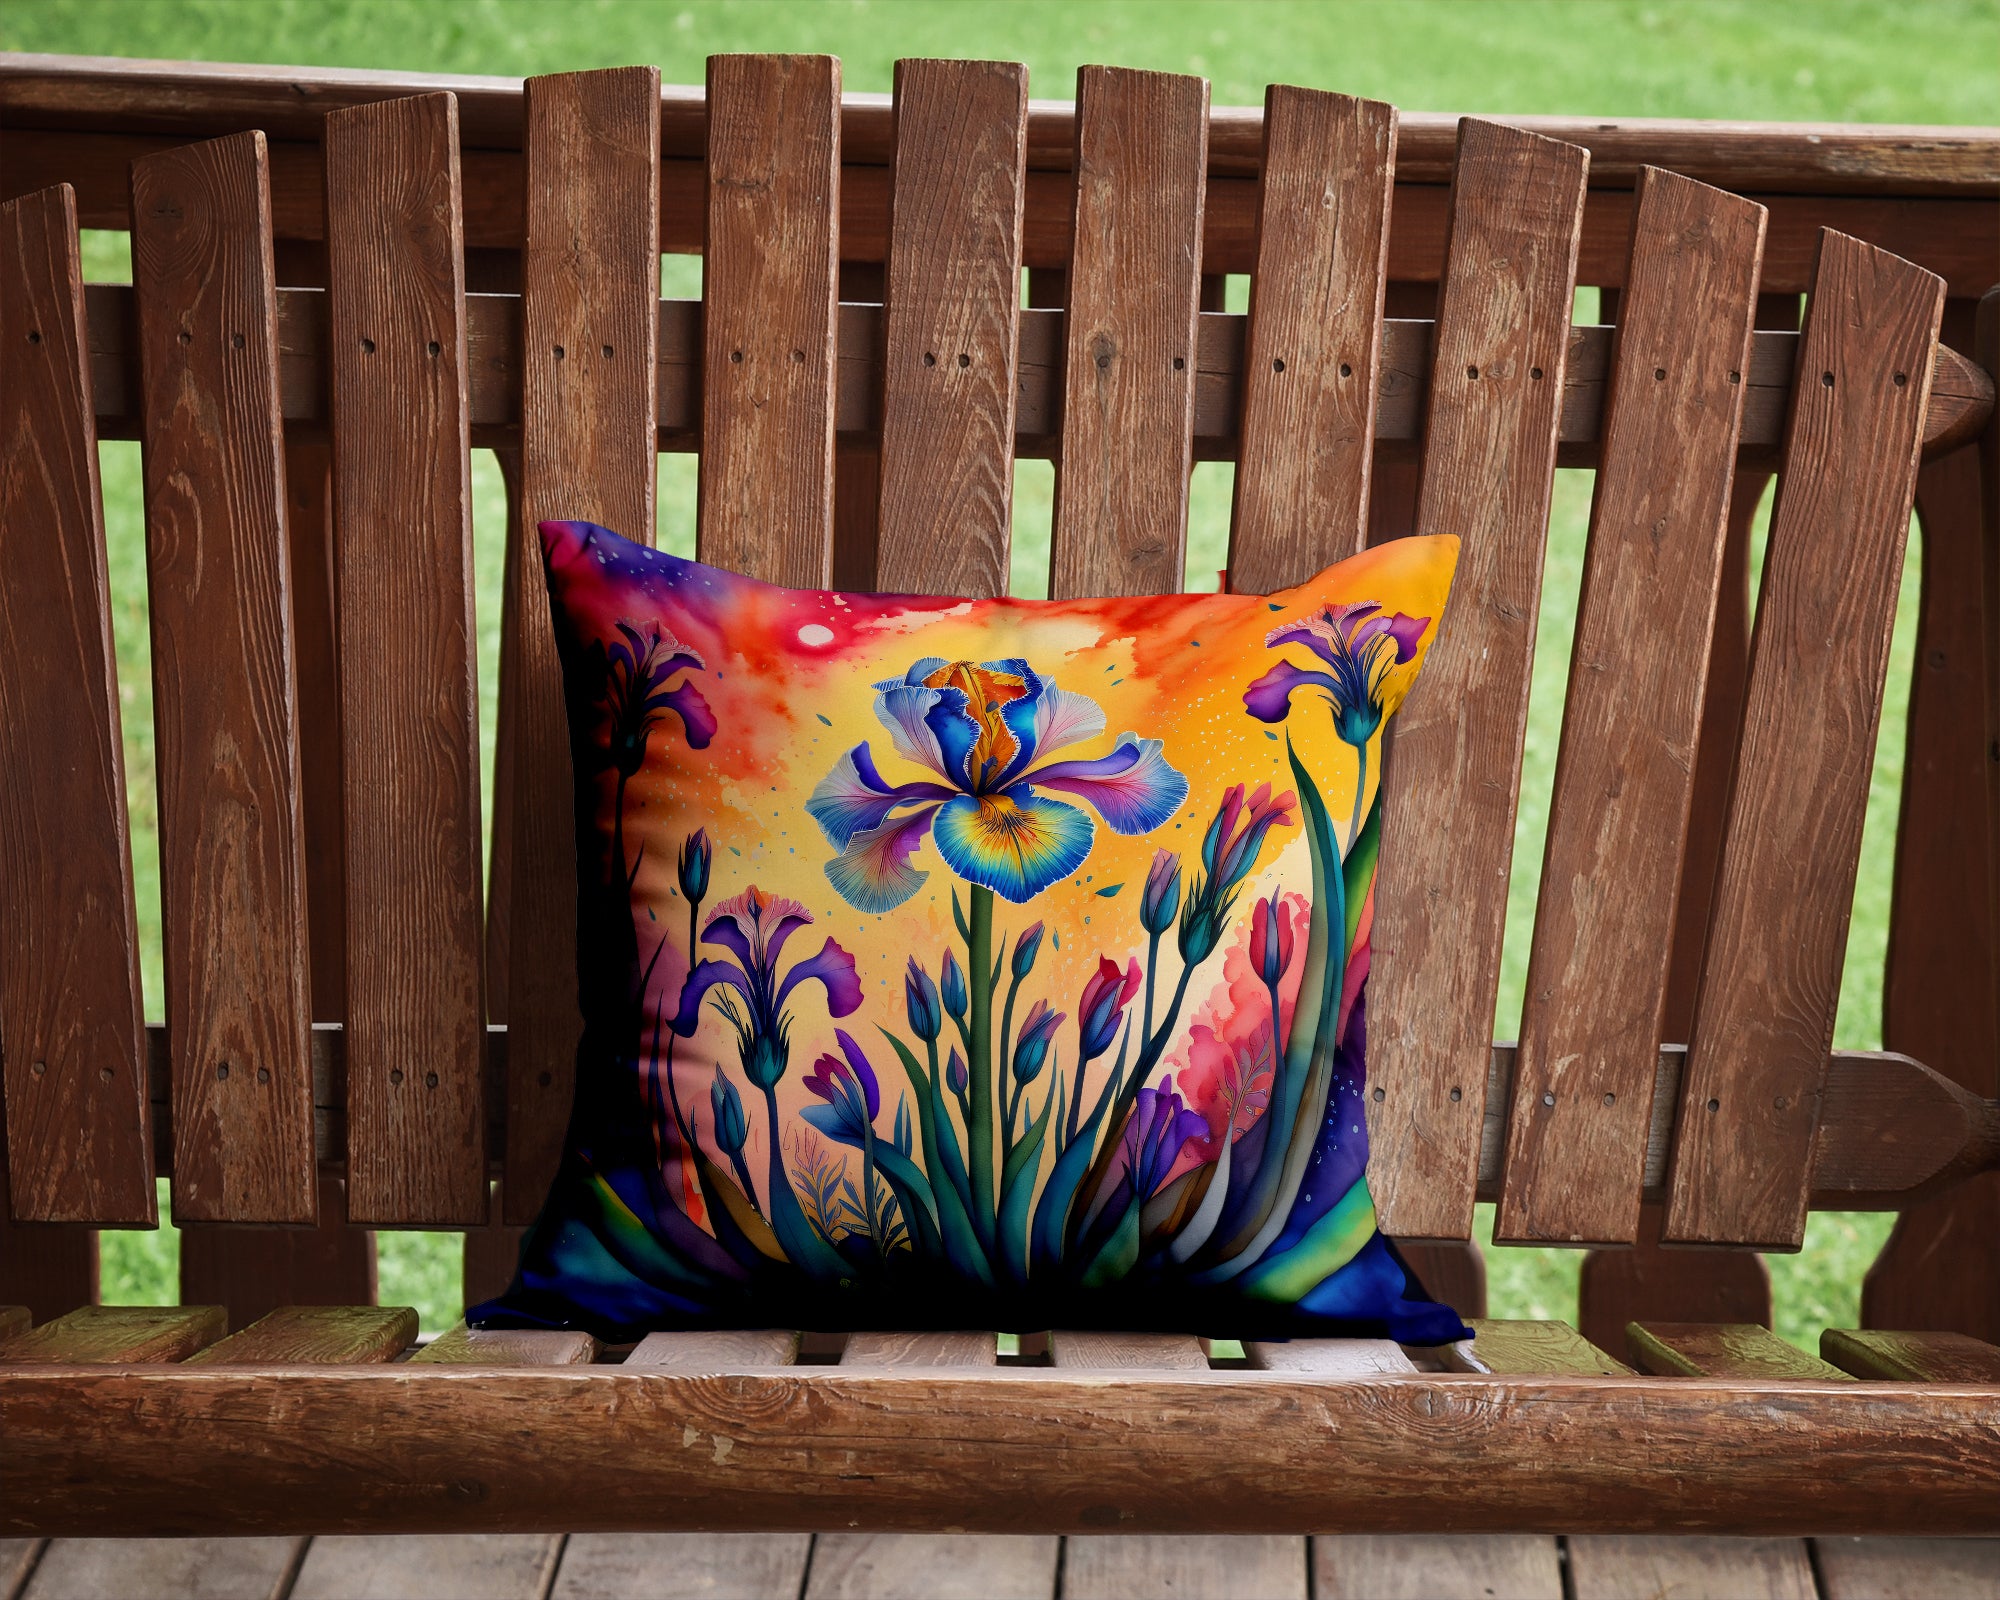 Colorful Iris Fabric Decorative Pillow